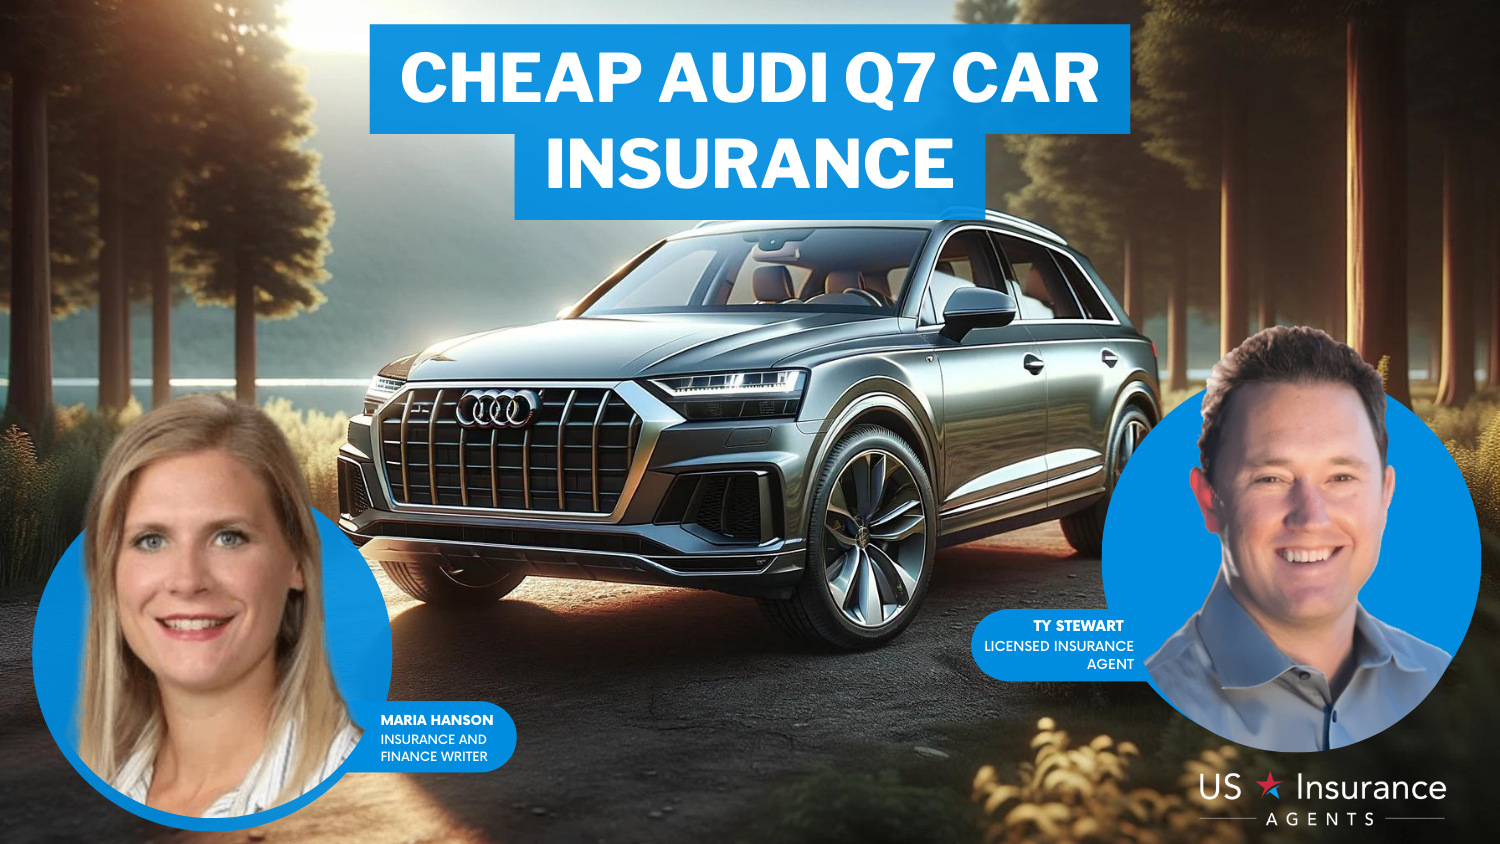 Cheap Audi Q7 Car Insurance: Progressive, USAA, and State Farm